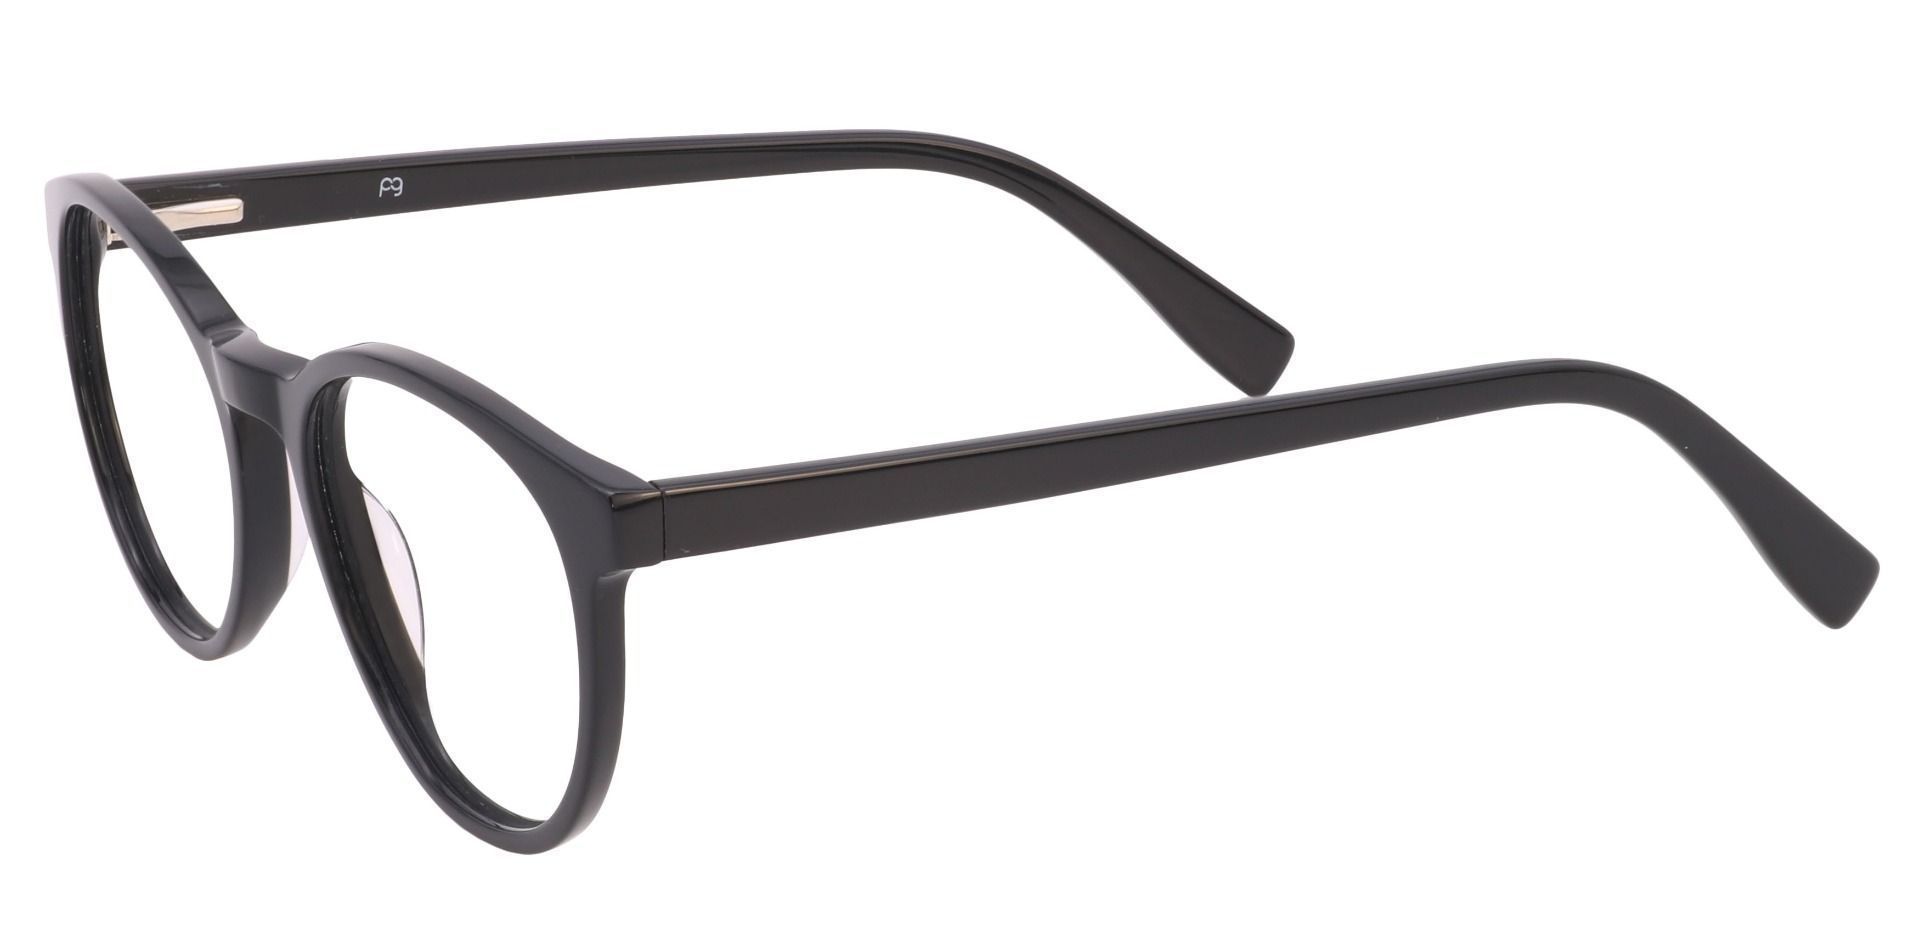 Stellar Oval Progressive Glasses - Black